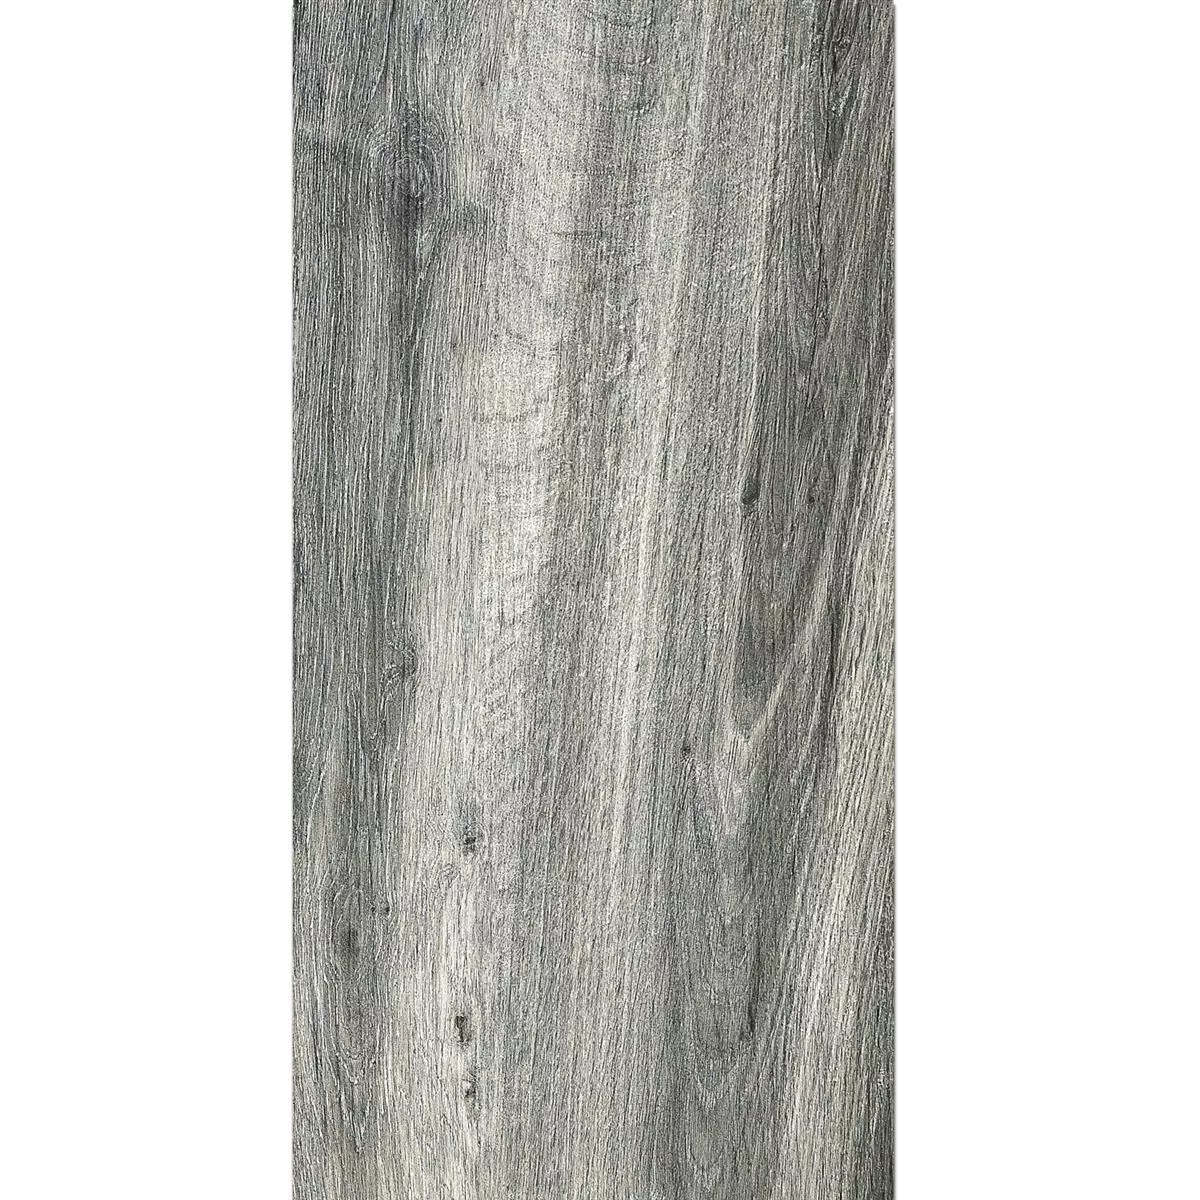 Terass Klinker Starwood Träimitation Grey 45x90cm